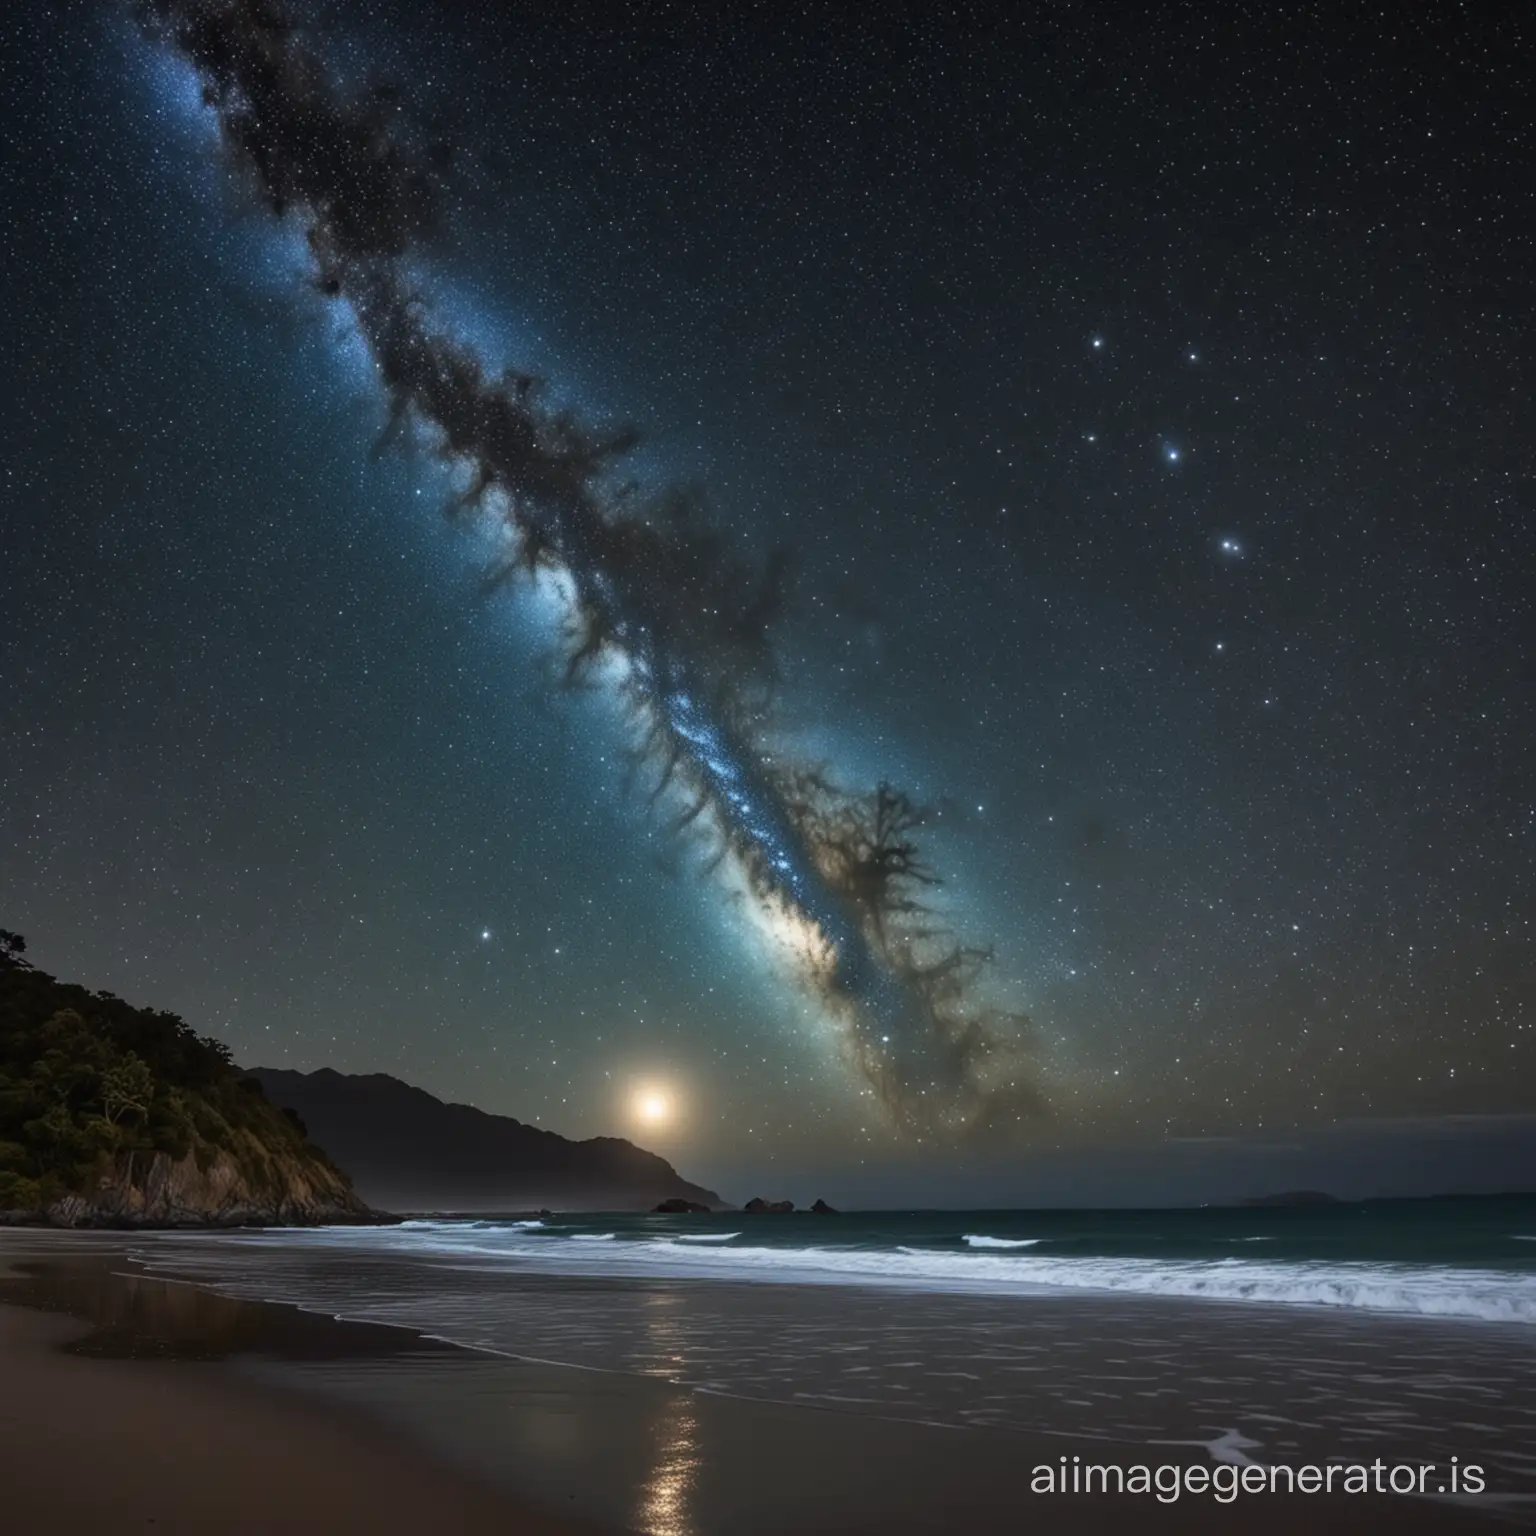 New Zealand beach night sky images